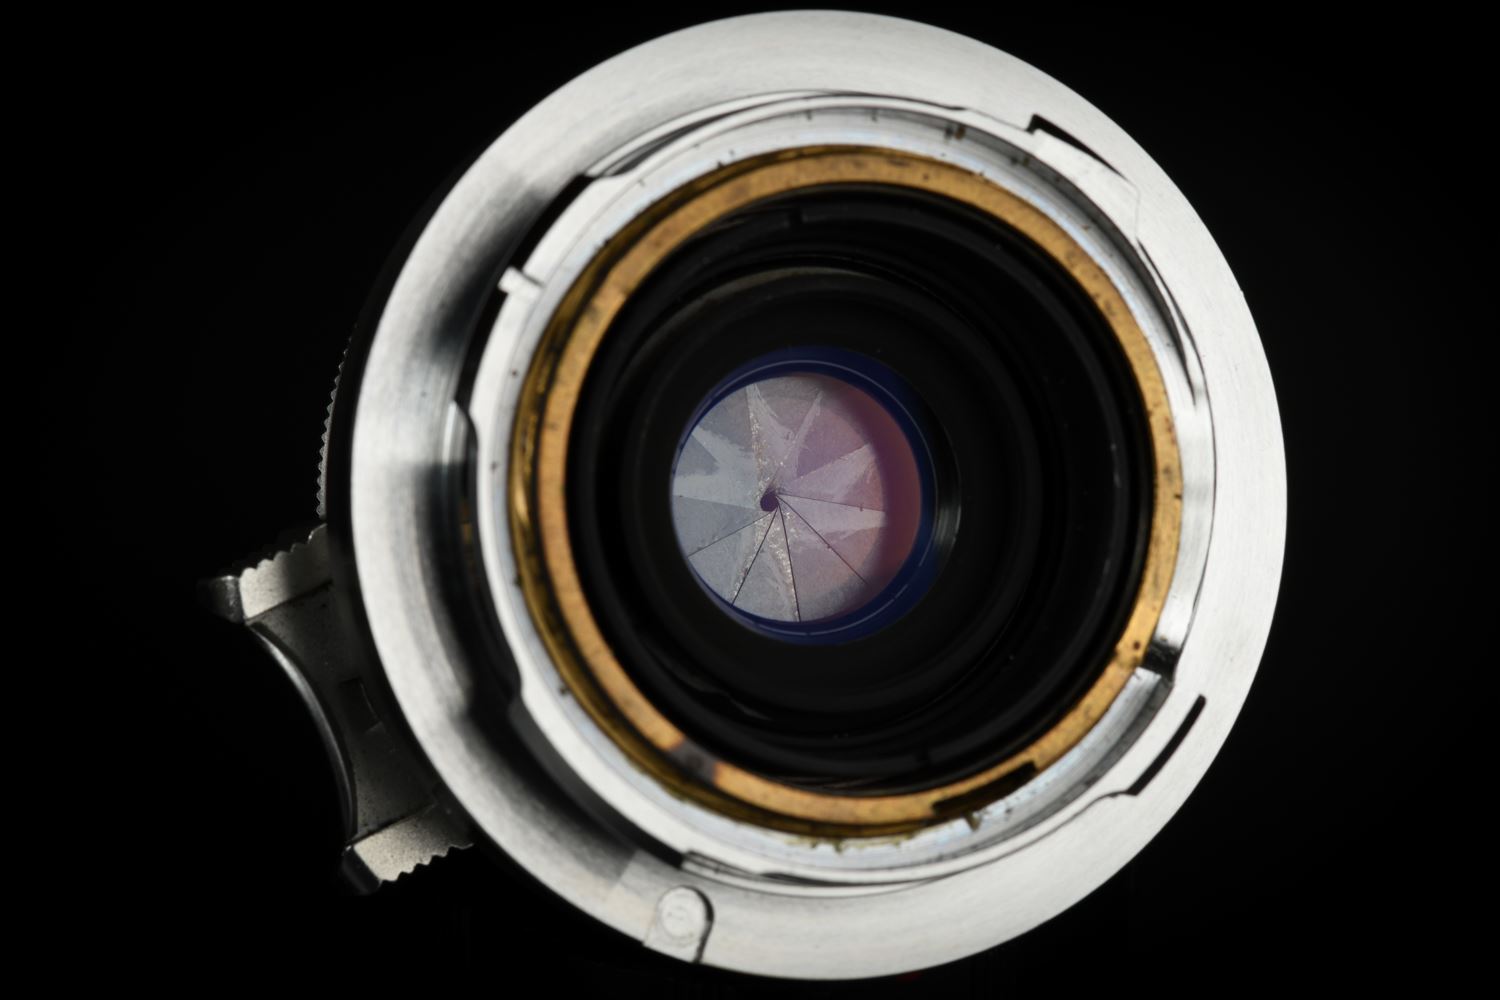 Picture of Leica Summaron 35mm f/2.8 Silver M2